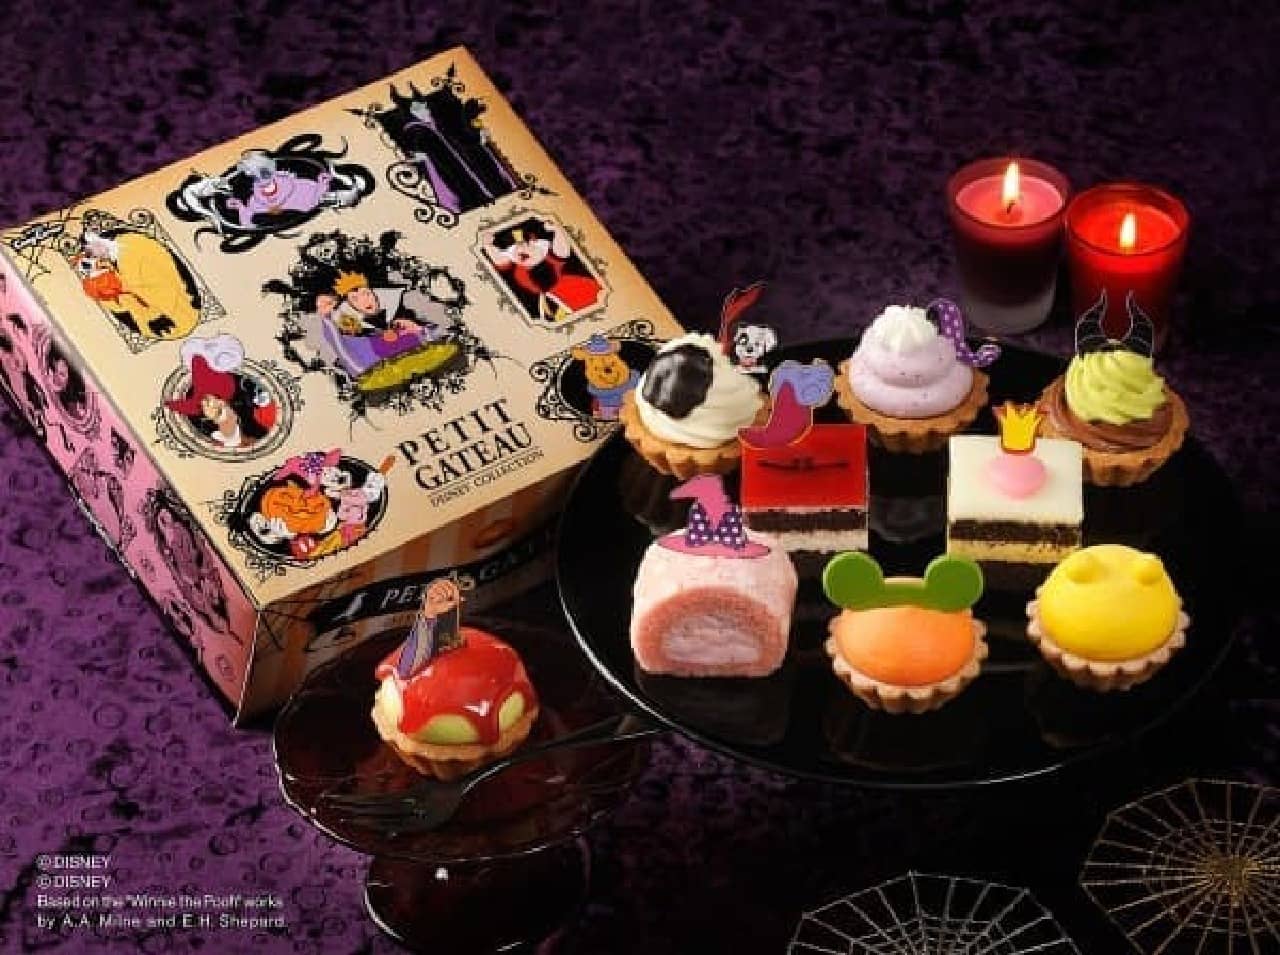 That Kowa-i "villain" is also a cute petit cake !?